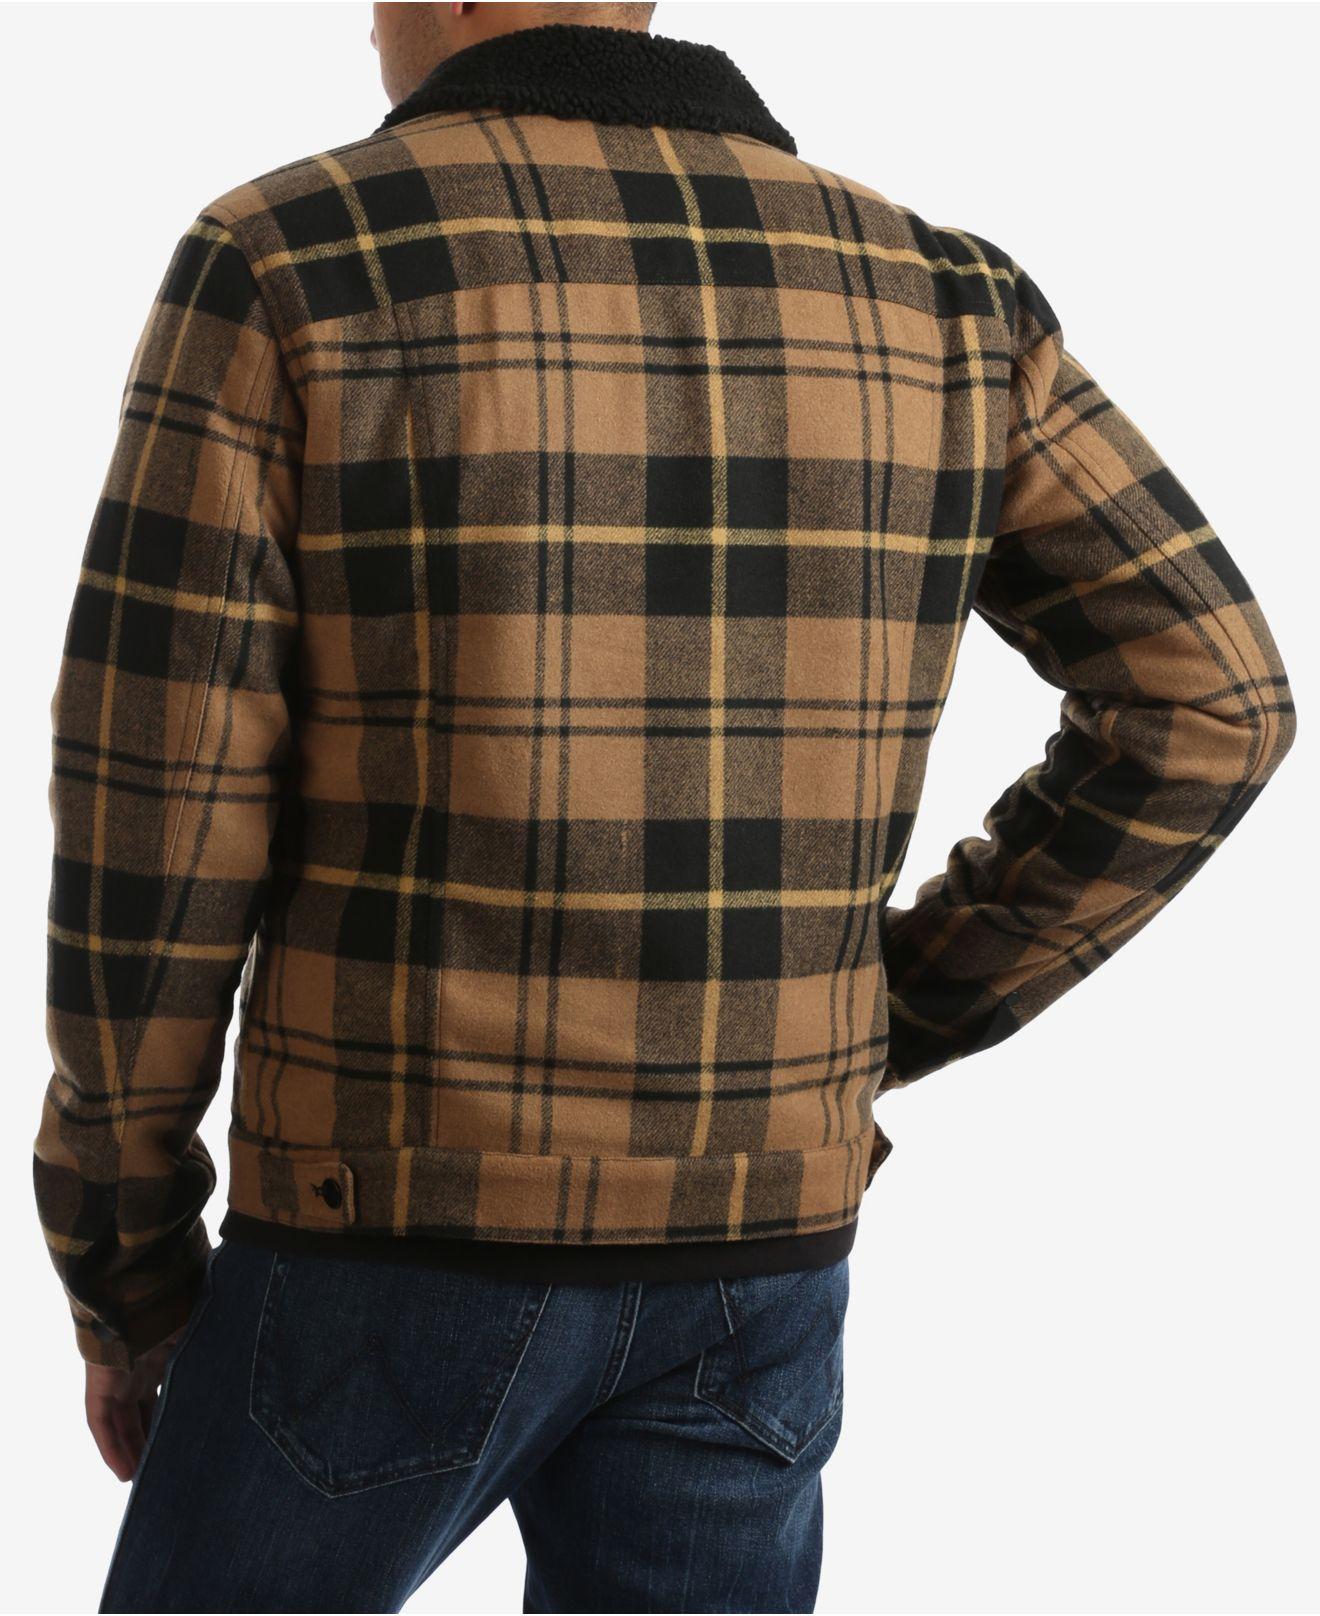 Lyst - Wrangler Borg Lined Check Wool Trucker Jacket In Golden Brown in